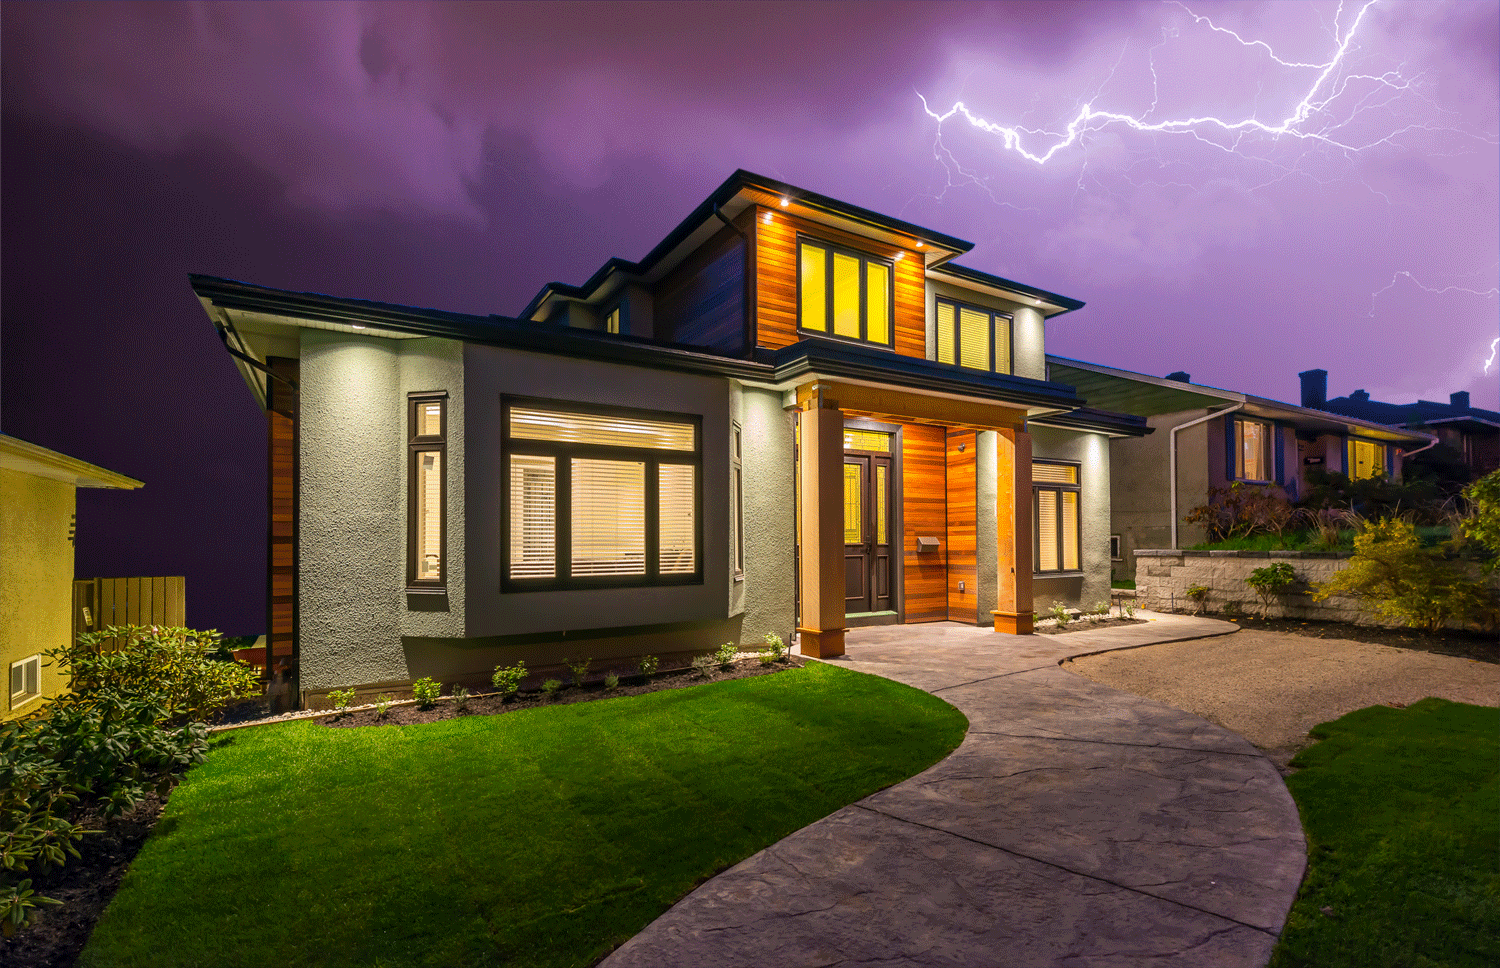 lights on during a lightning storm